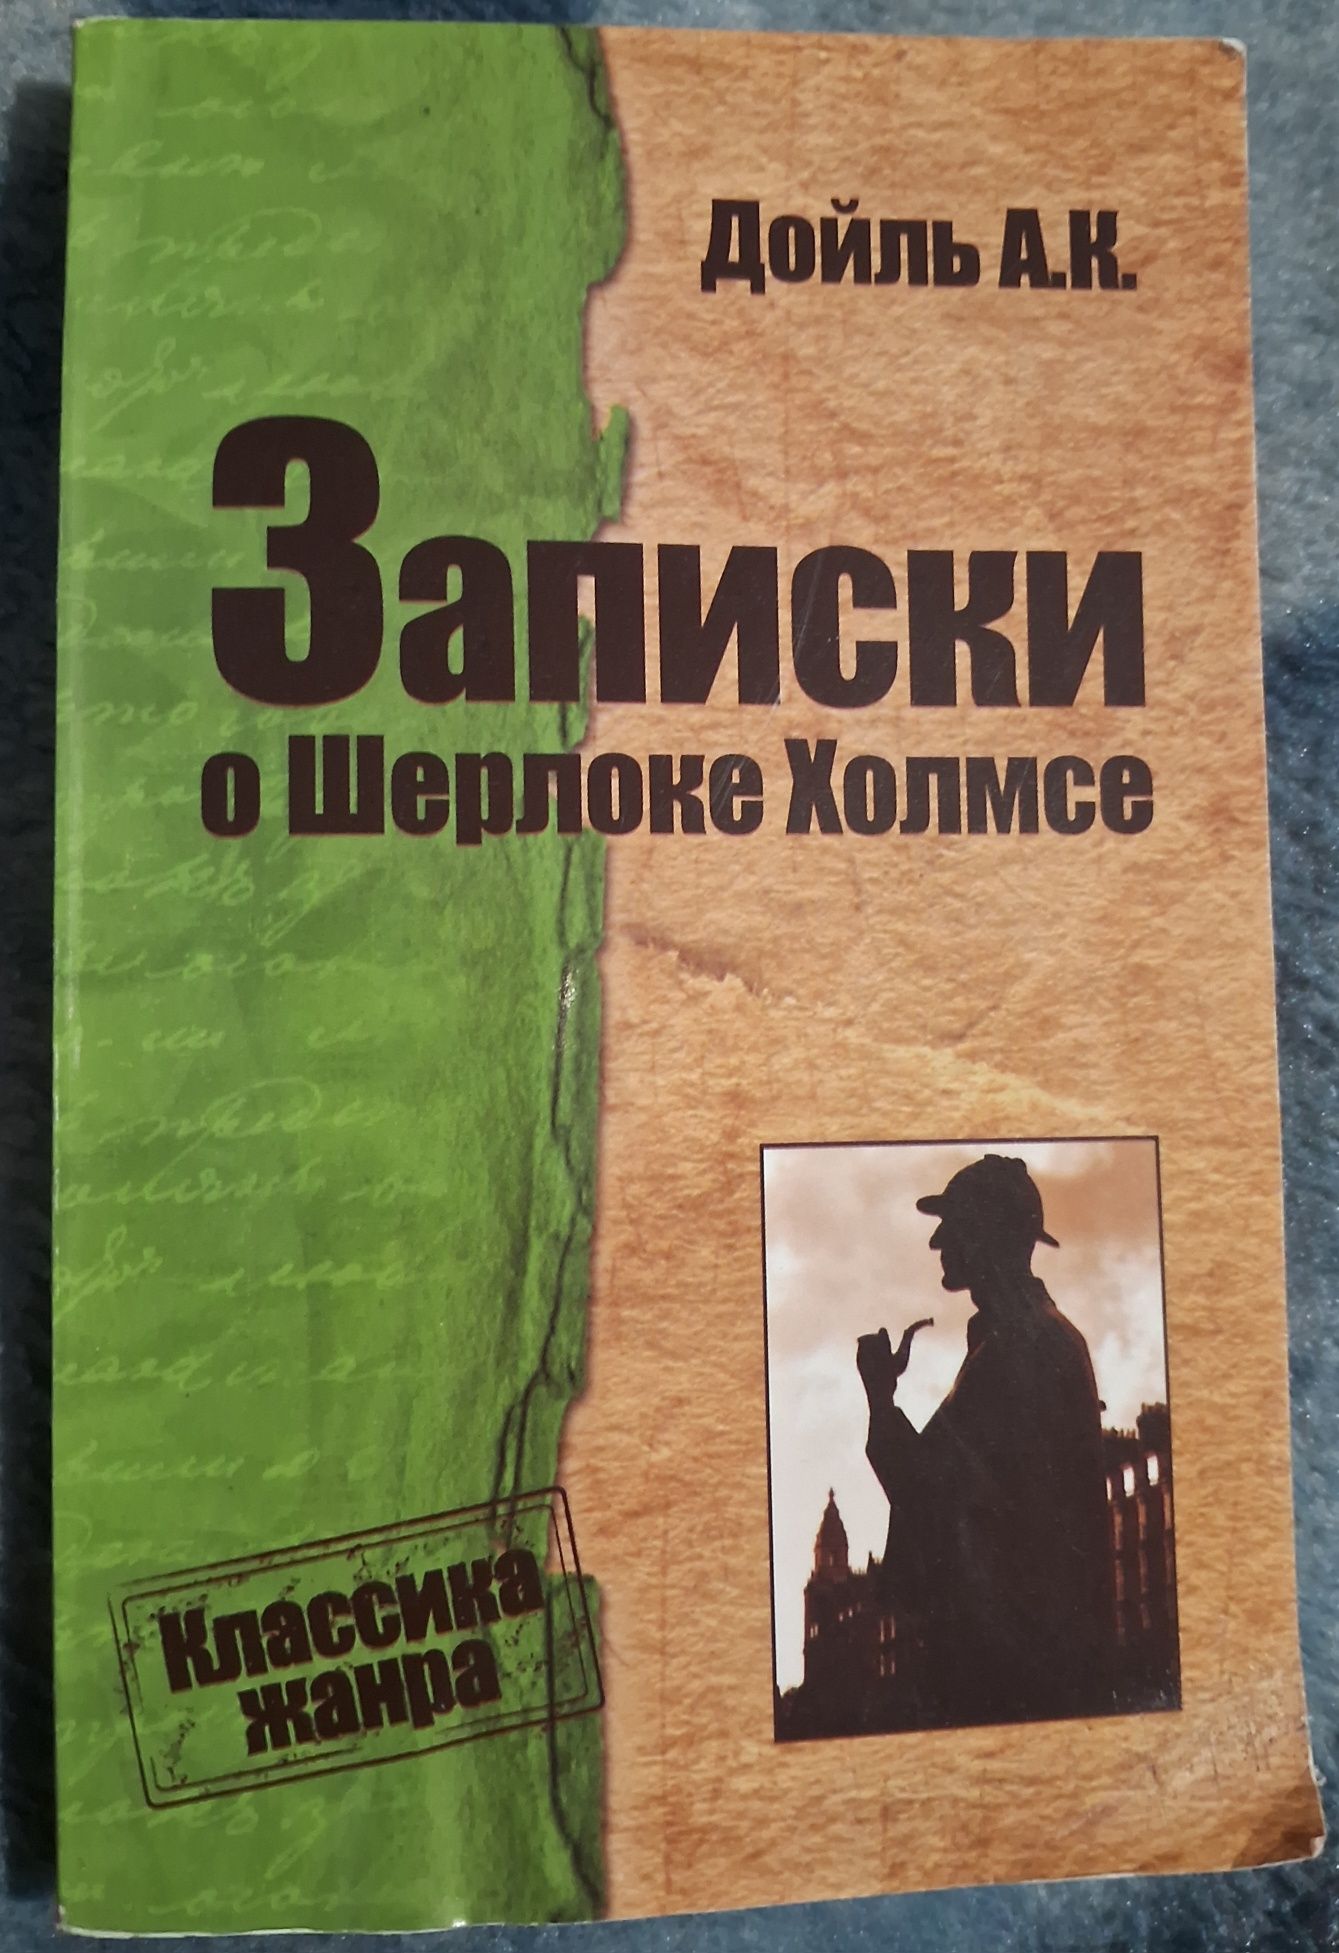 "Записки о Шерлоке Холмсе" А.К.Дойль